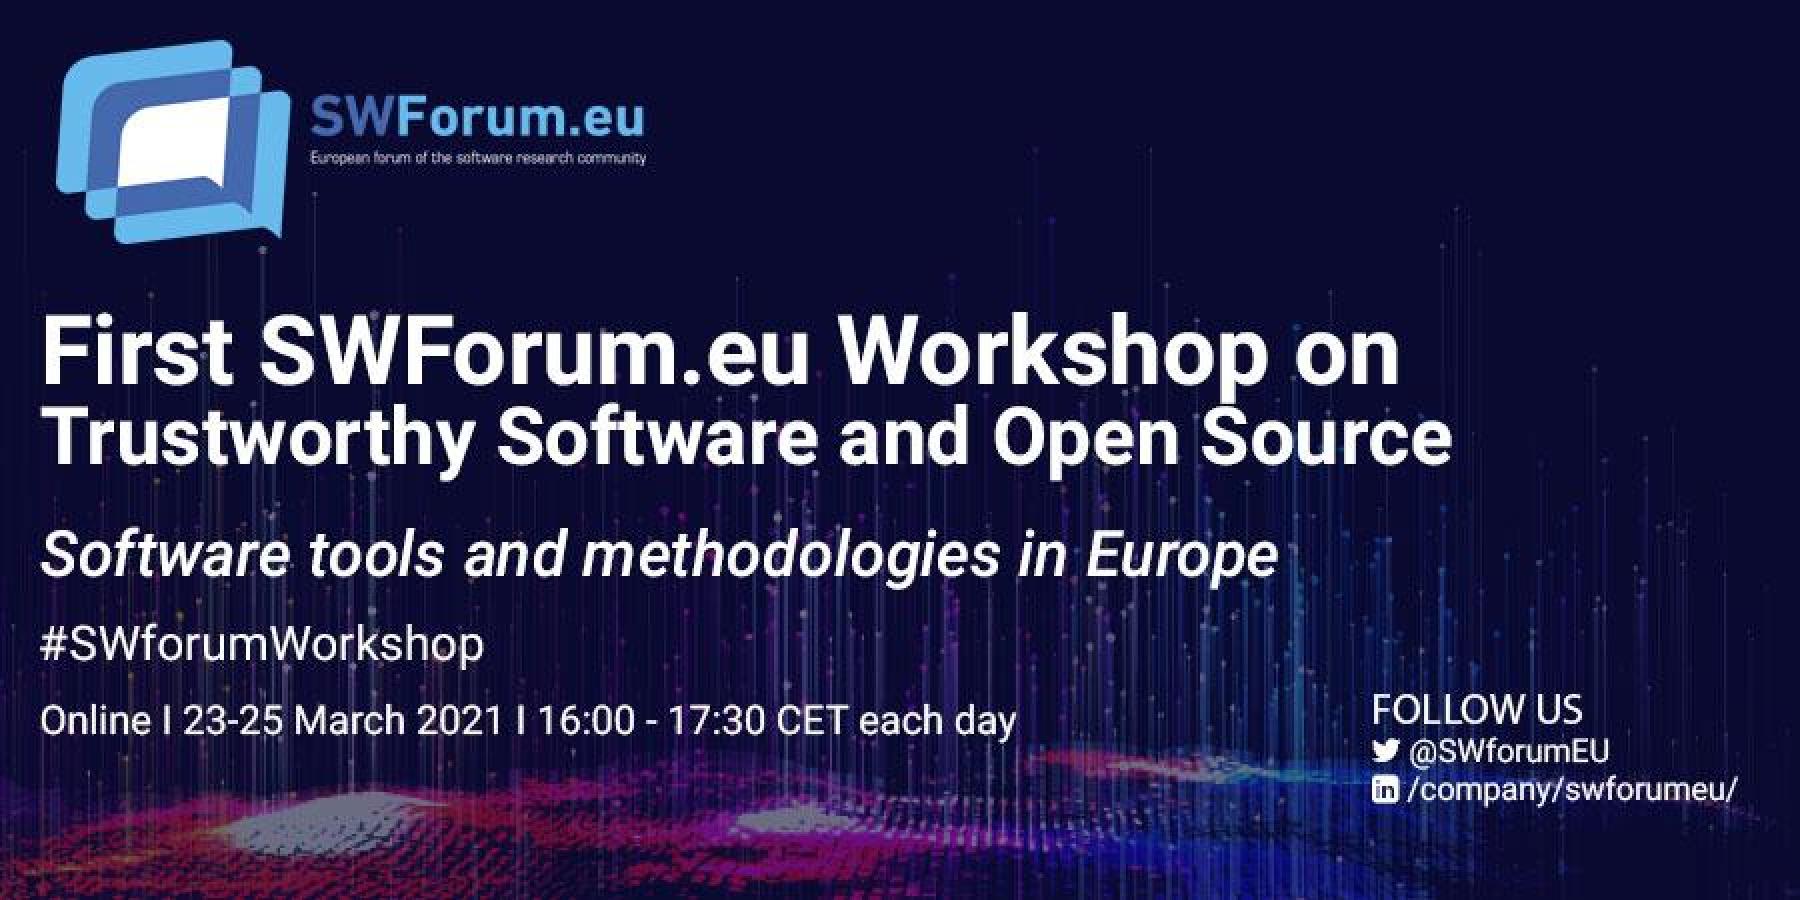 First SWForum.eu Workshop on Trustworthy Software and Open Source